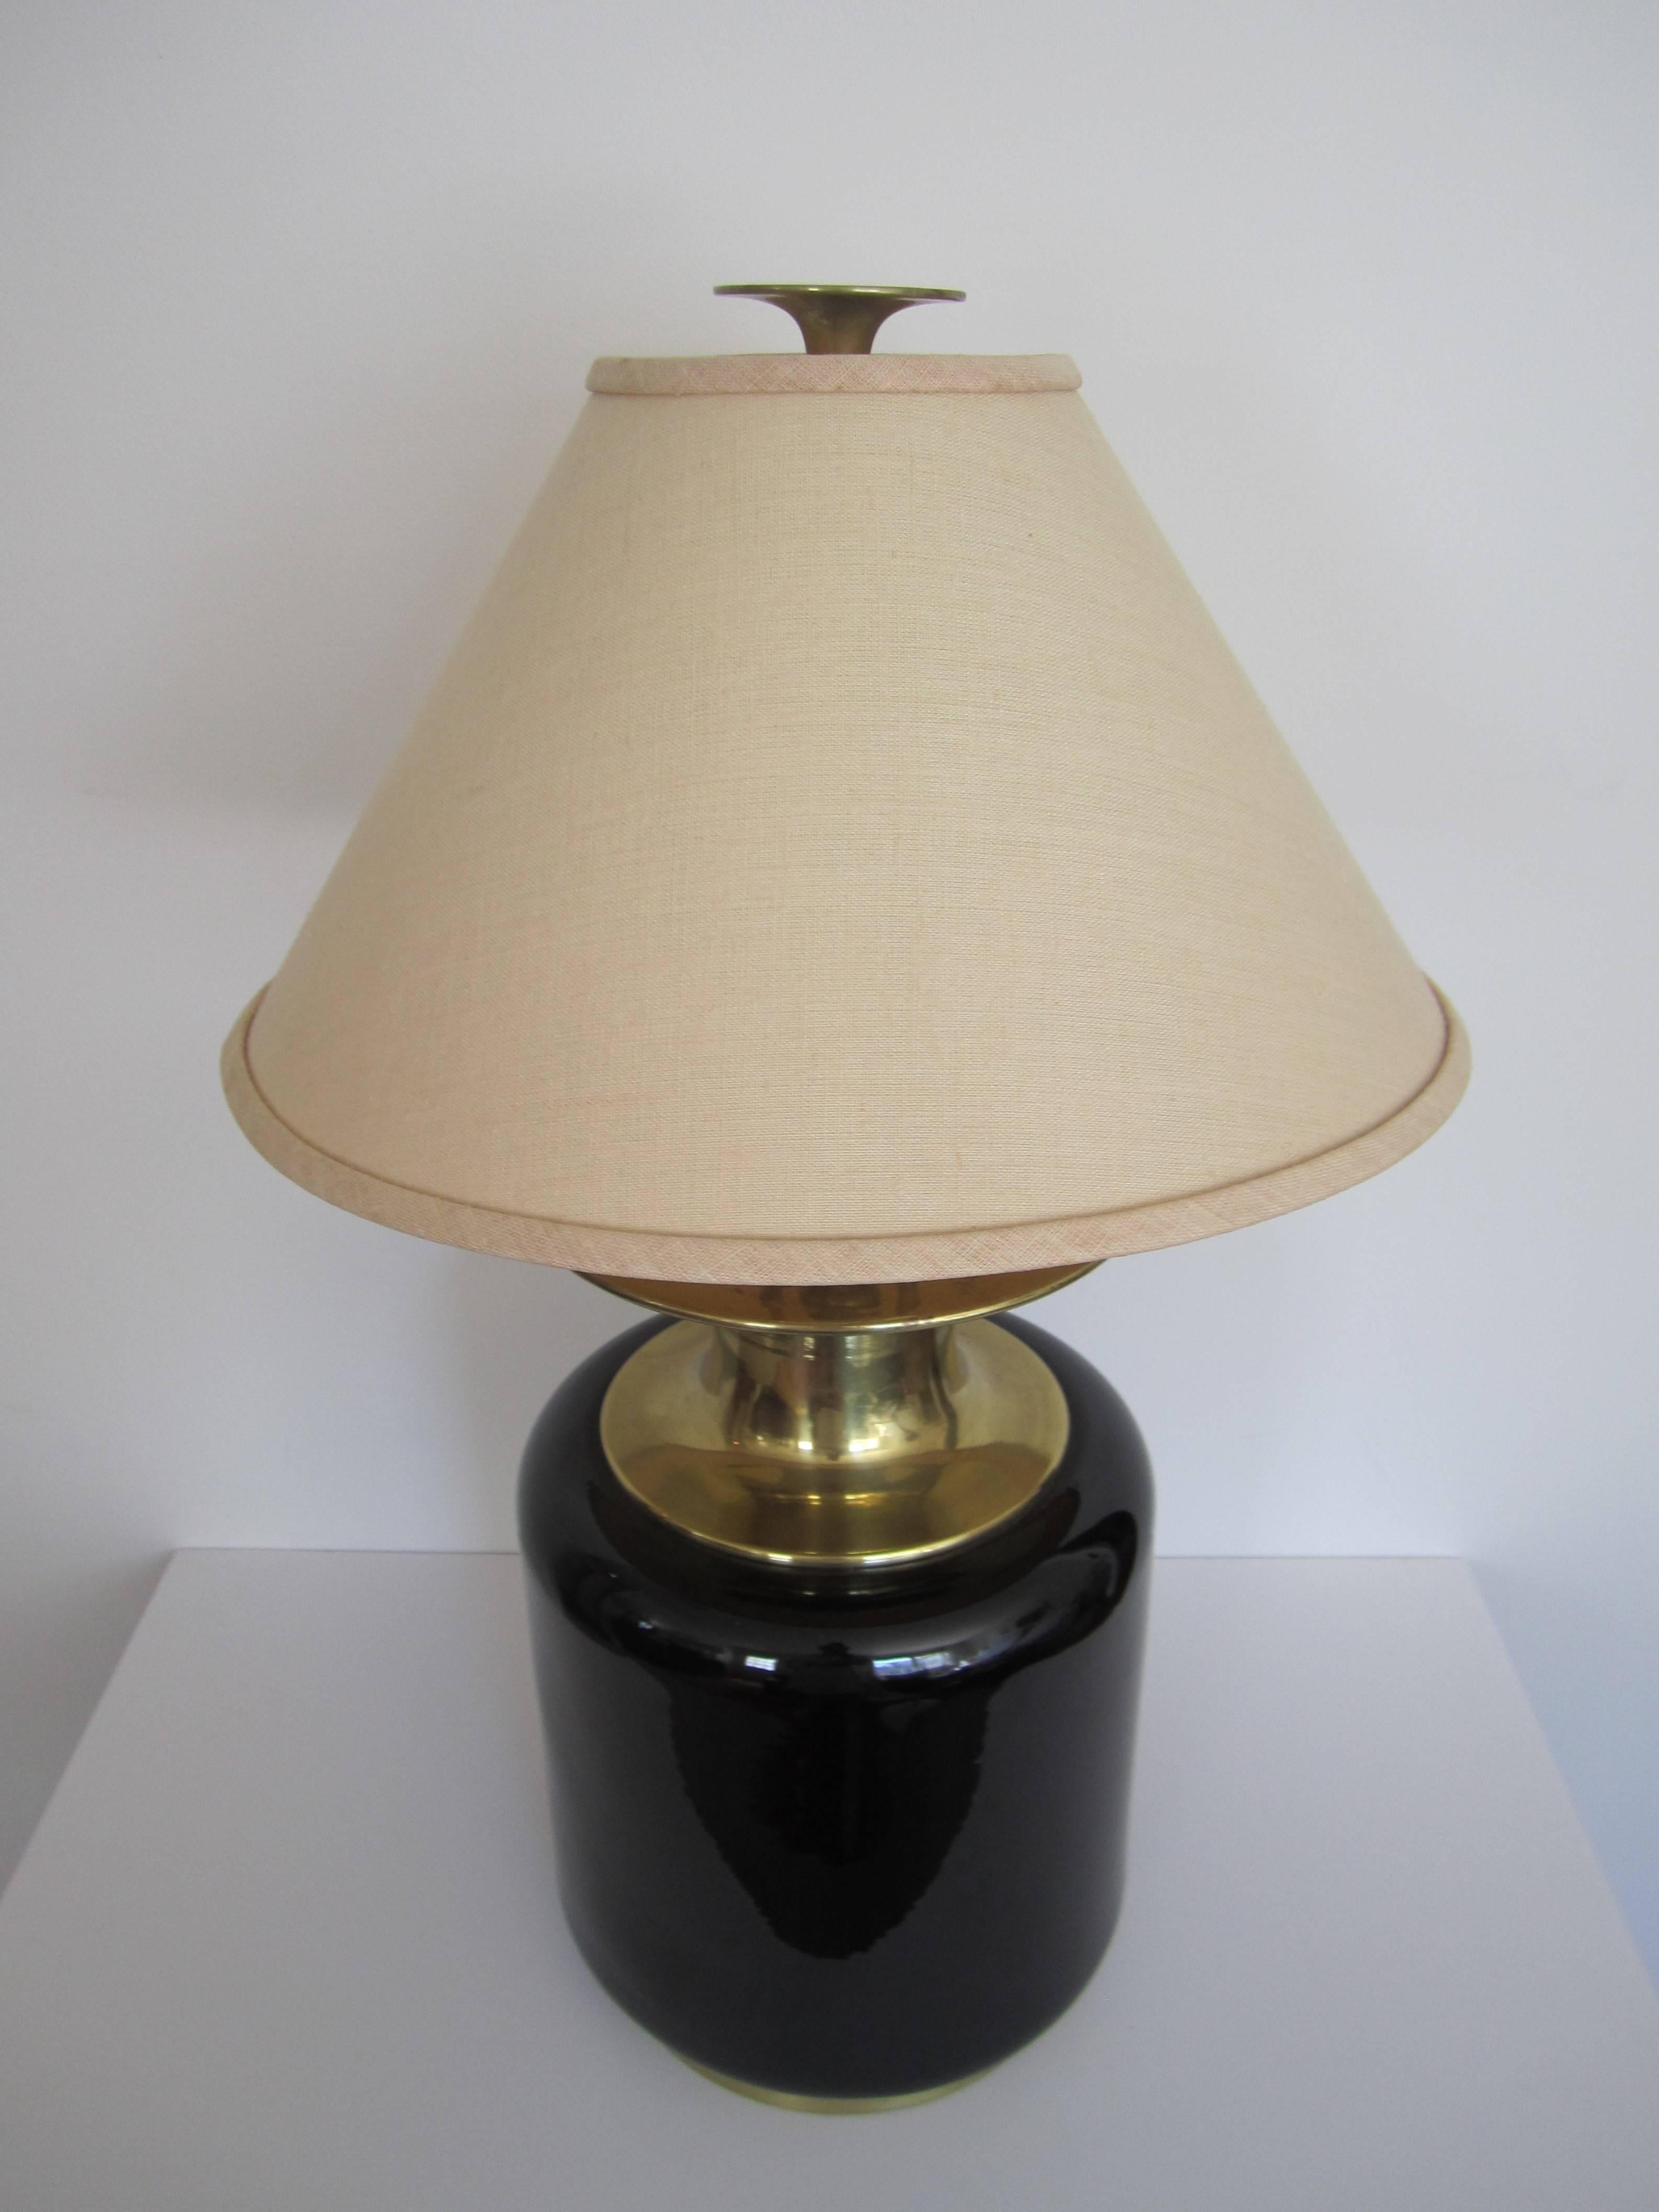 1980s lamp